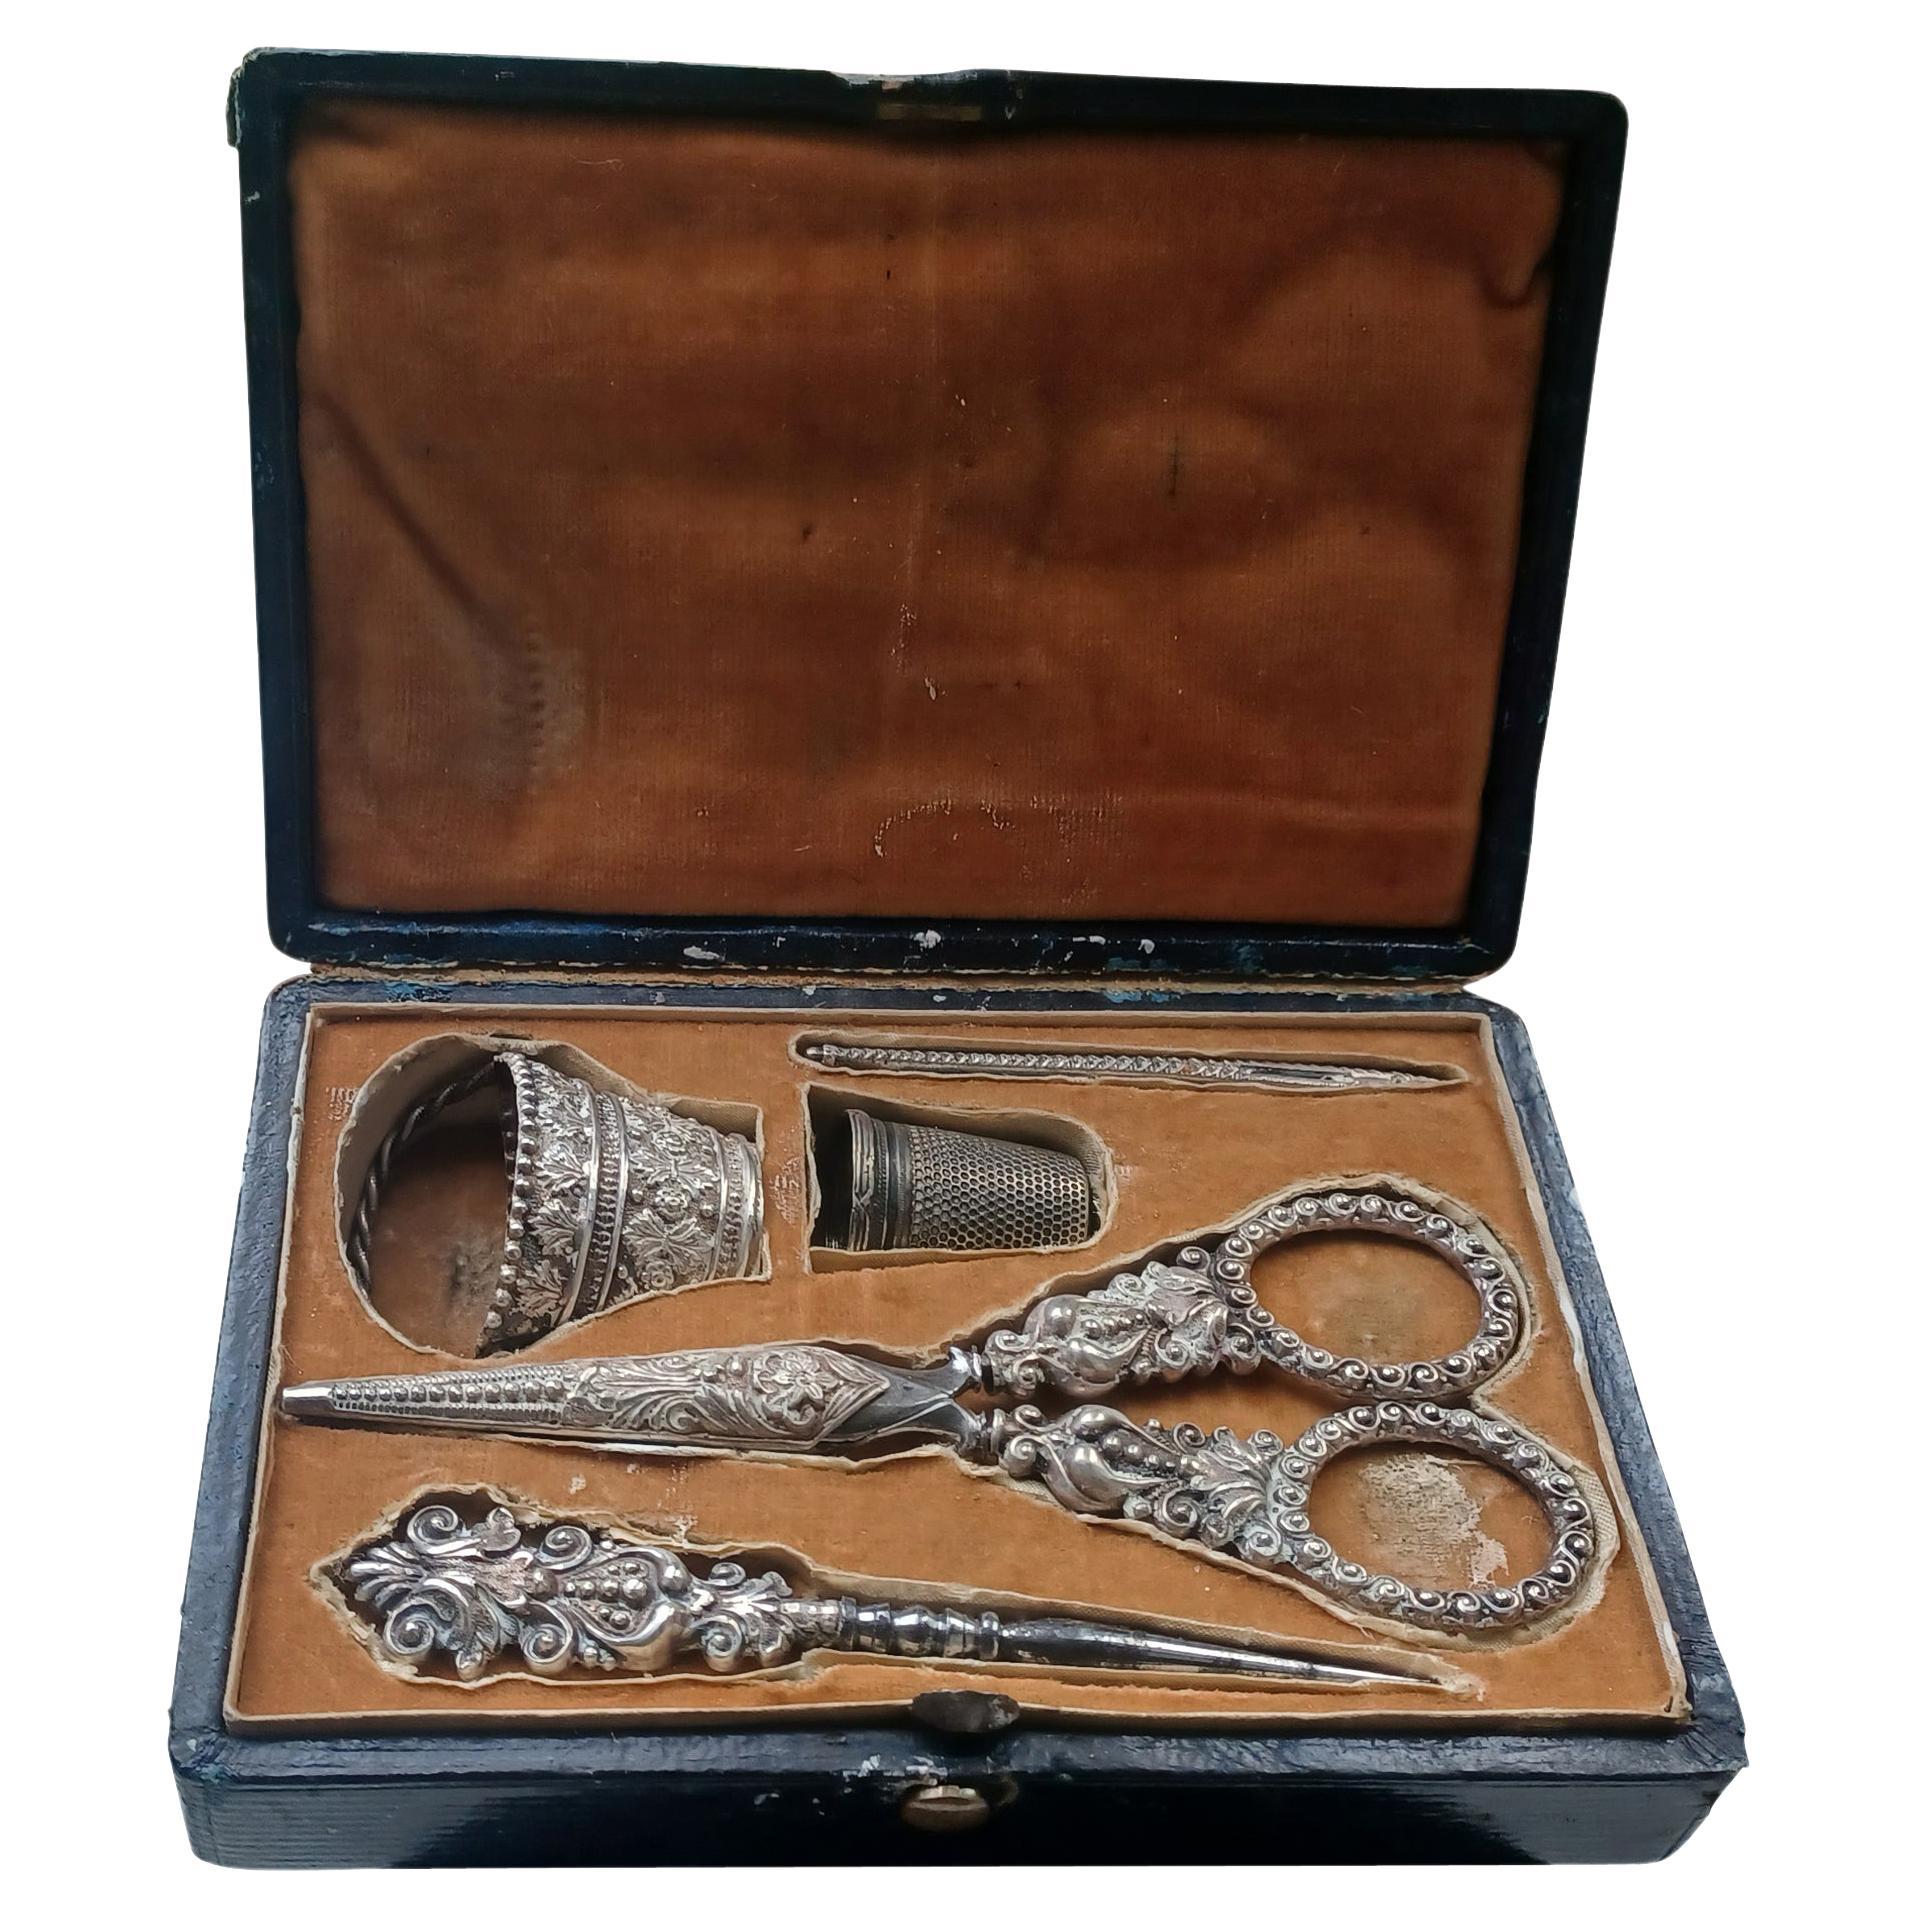 Rare Antique George IV Lady’s Sewing Necessaire with Original Case, est. 1825